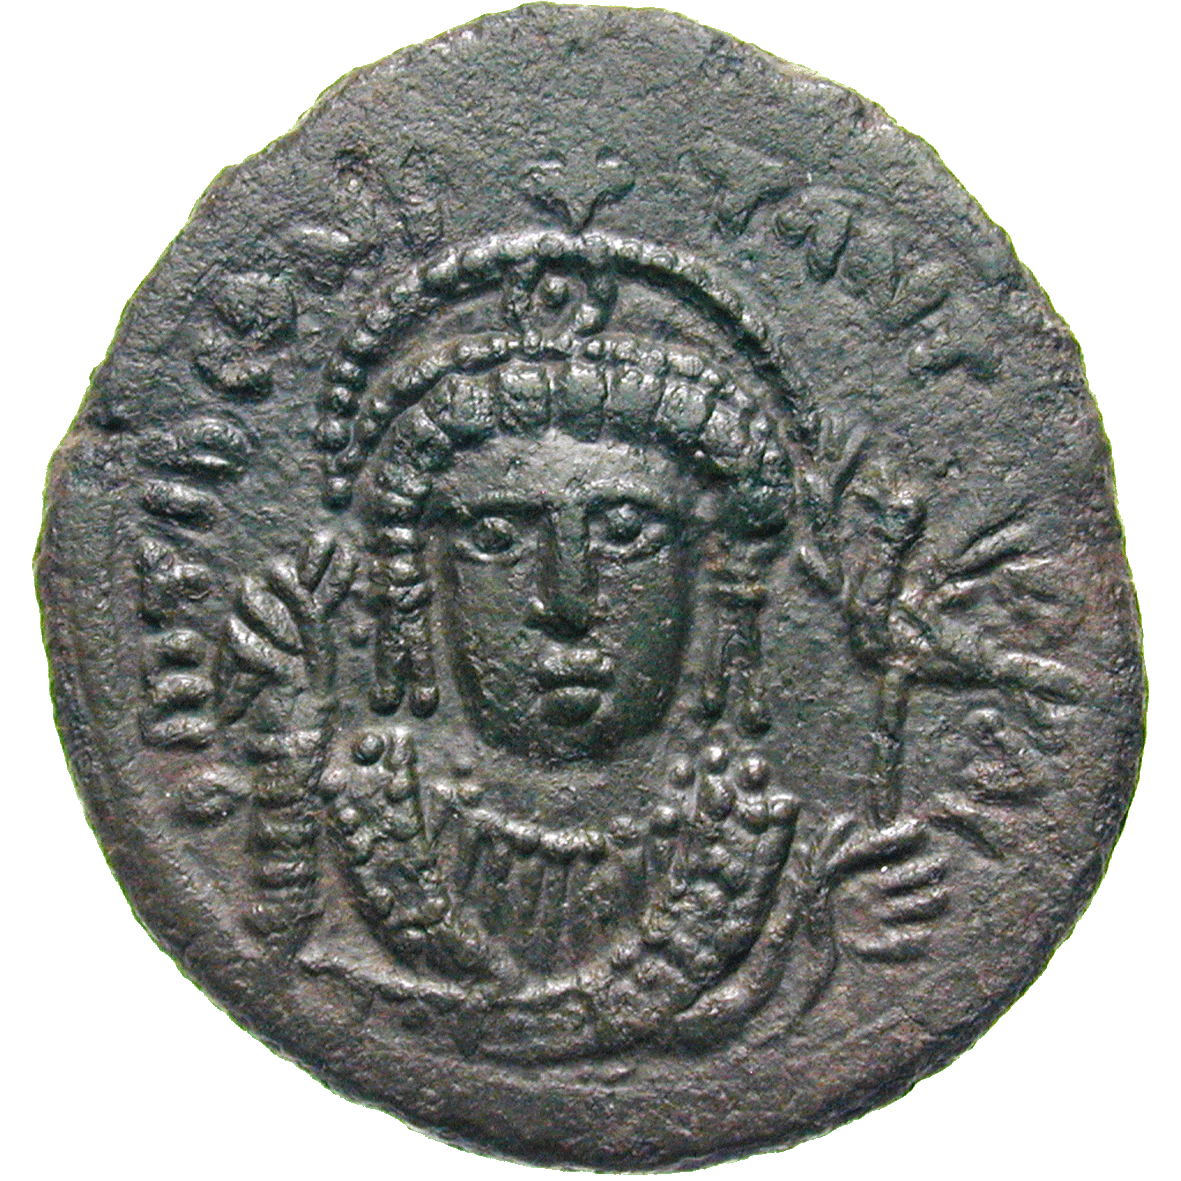 Byzantine Empire, Tiberius II Constantinus, Follis (obverse)